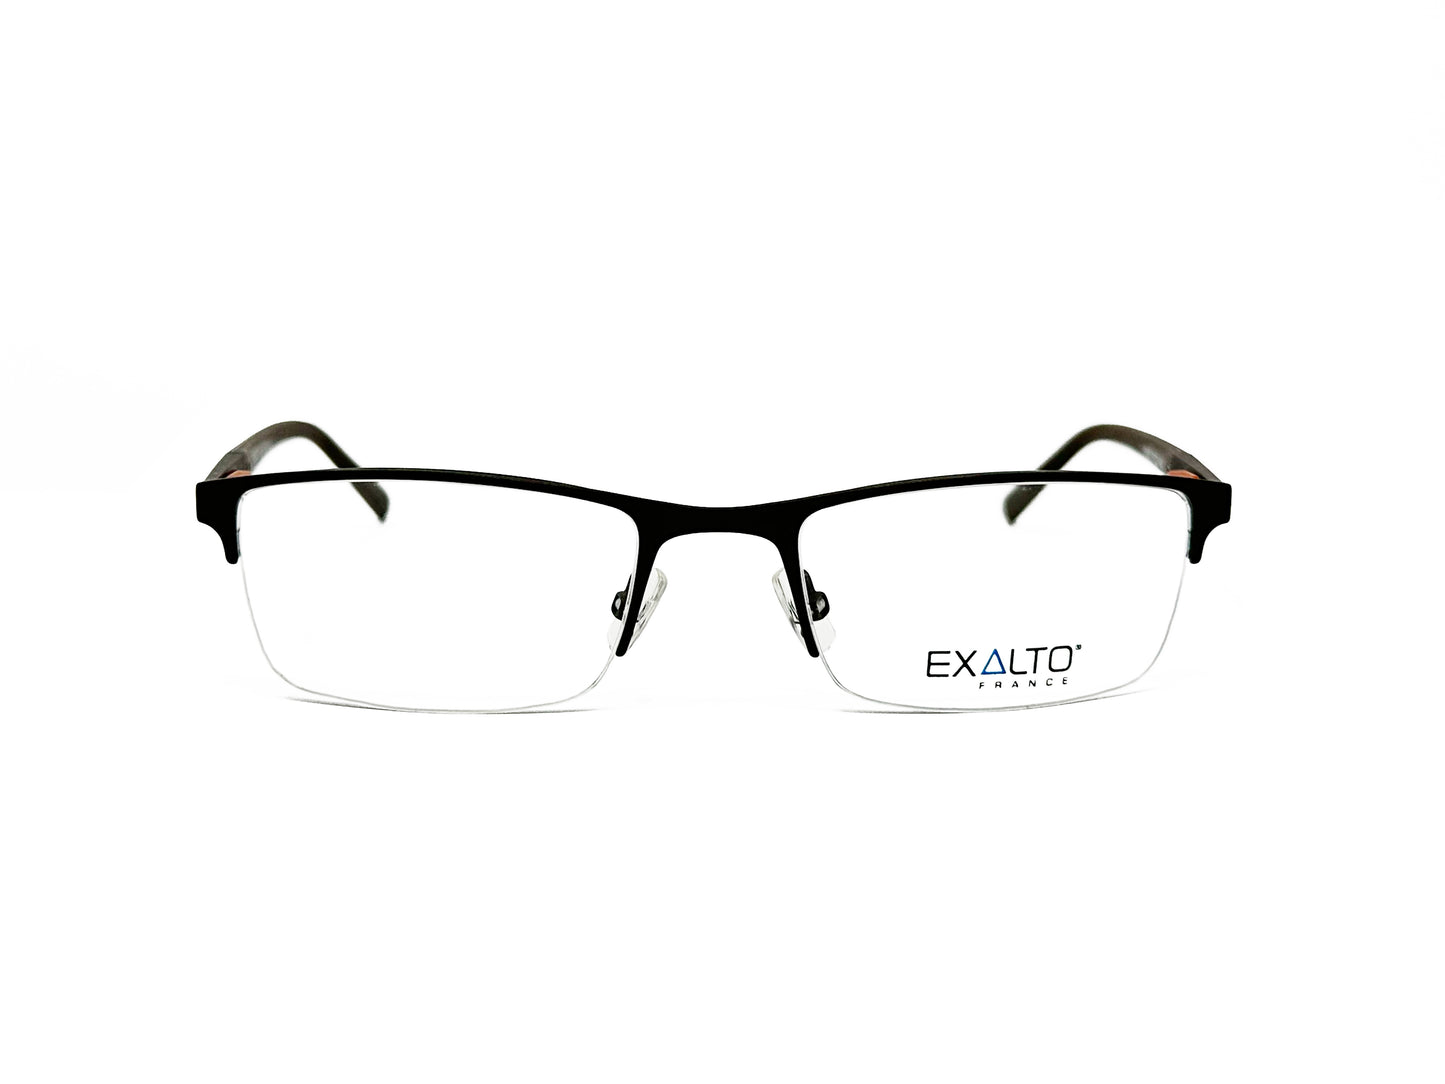 Exalto rectangular, metal, half-rim optical frame. Model: 65N092. Color: Black with red stripe on side. Front view. 